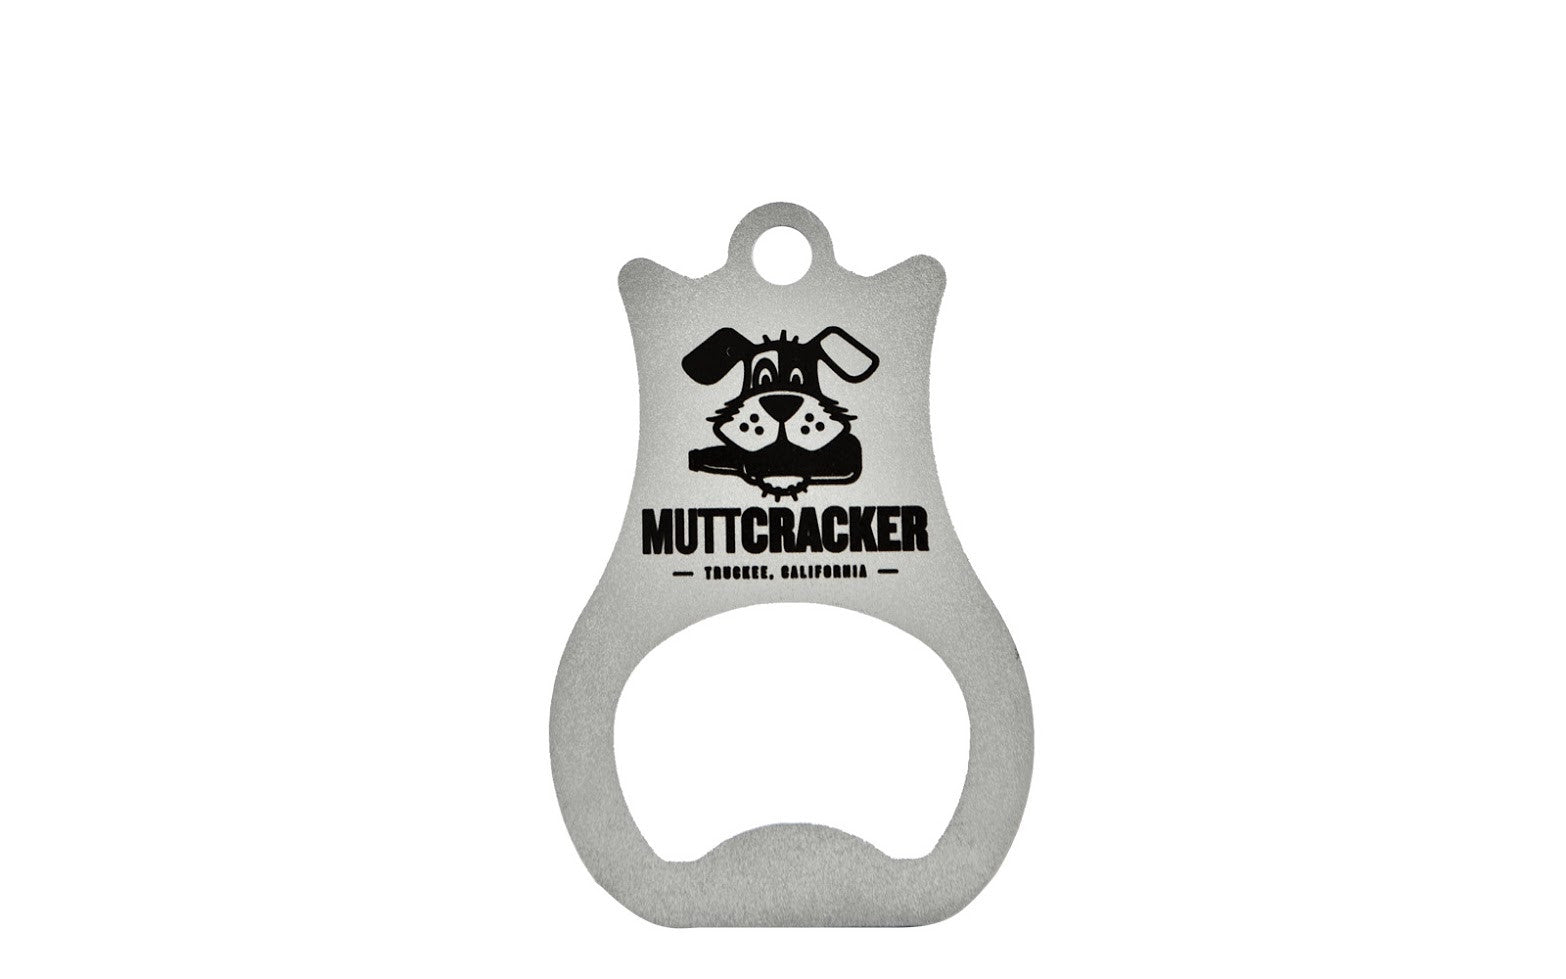 MuttCracker dog tag bottle opener